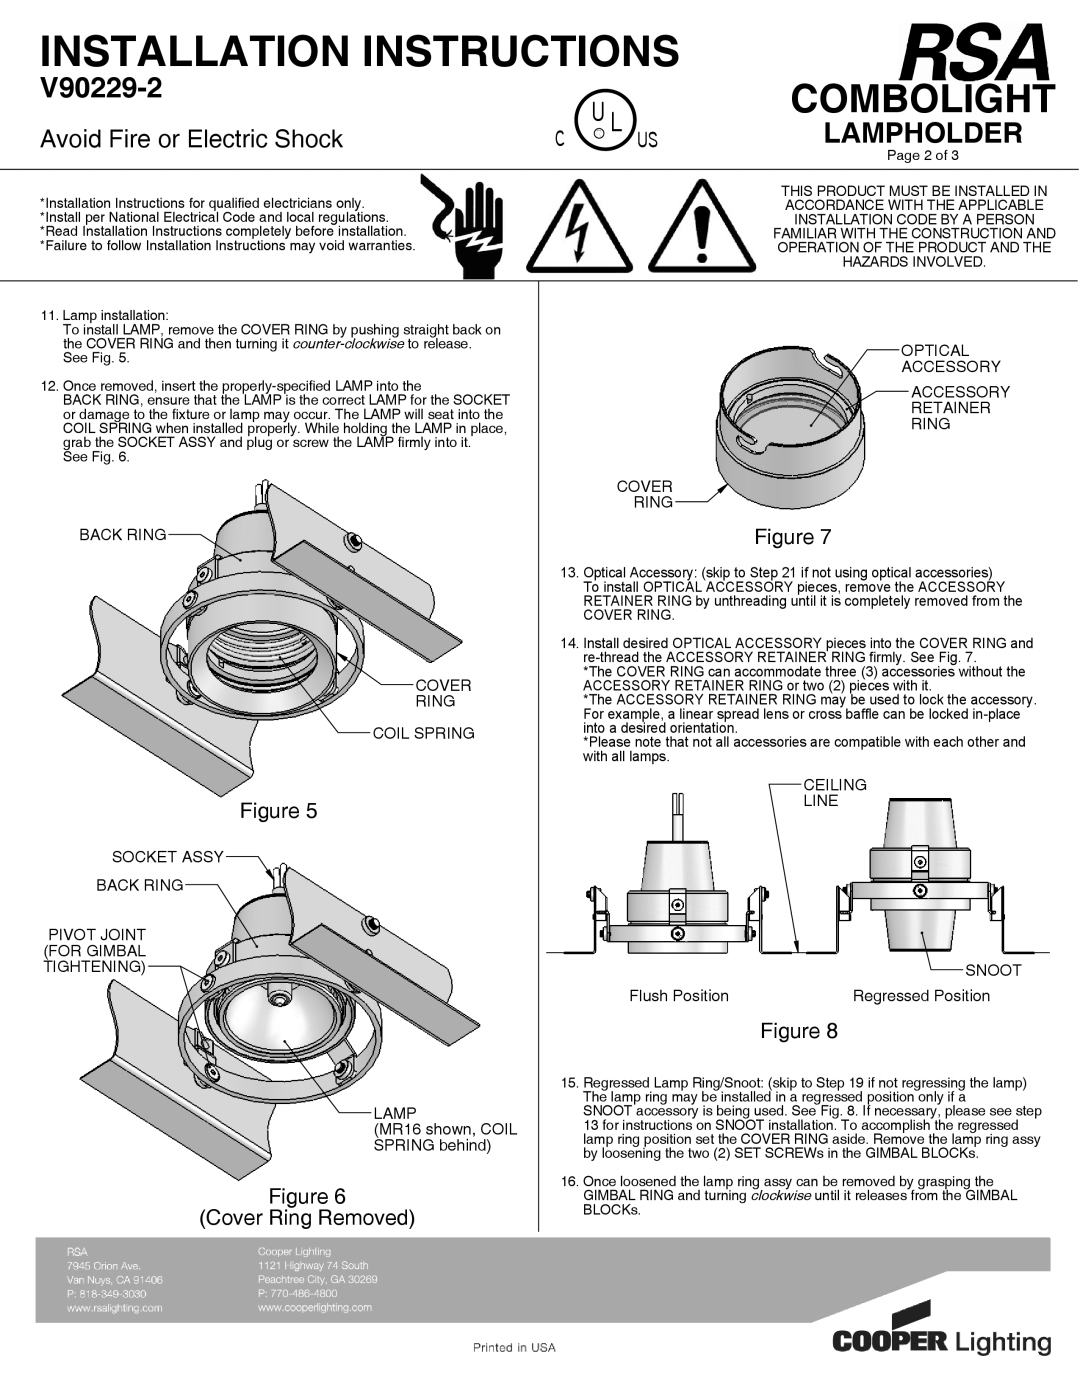 Cooper Lighting V90229-1N V90229-2, Lampholder, Avoid Fire or Electric Shock, Figure Cover Ring Removed, Combolight 